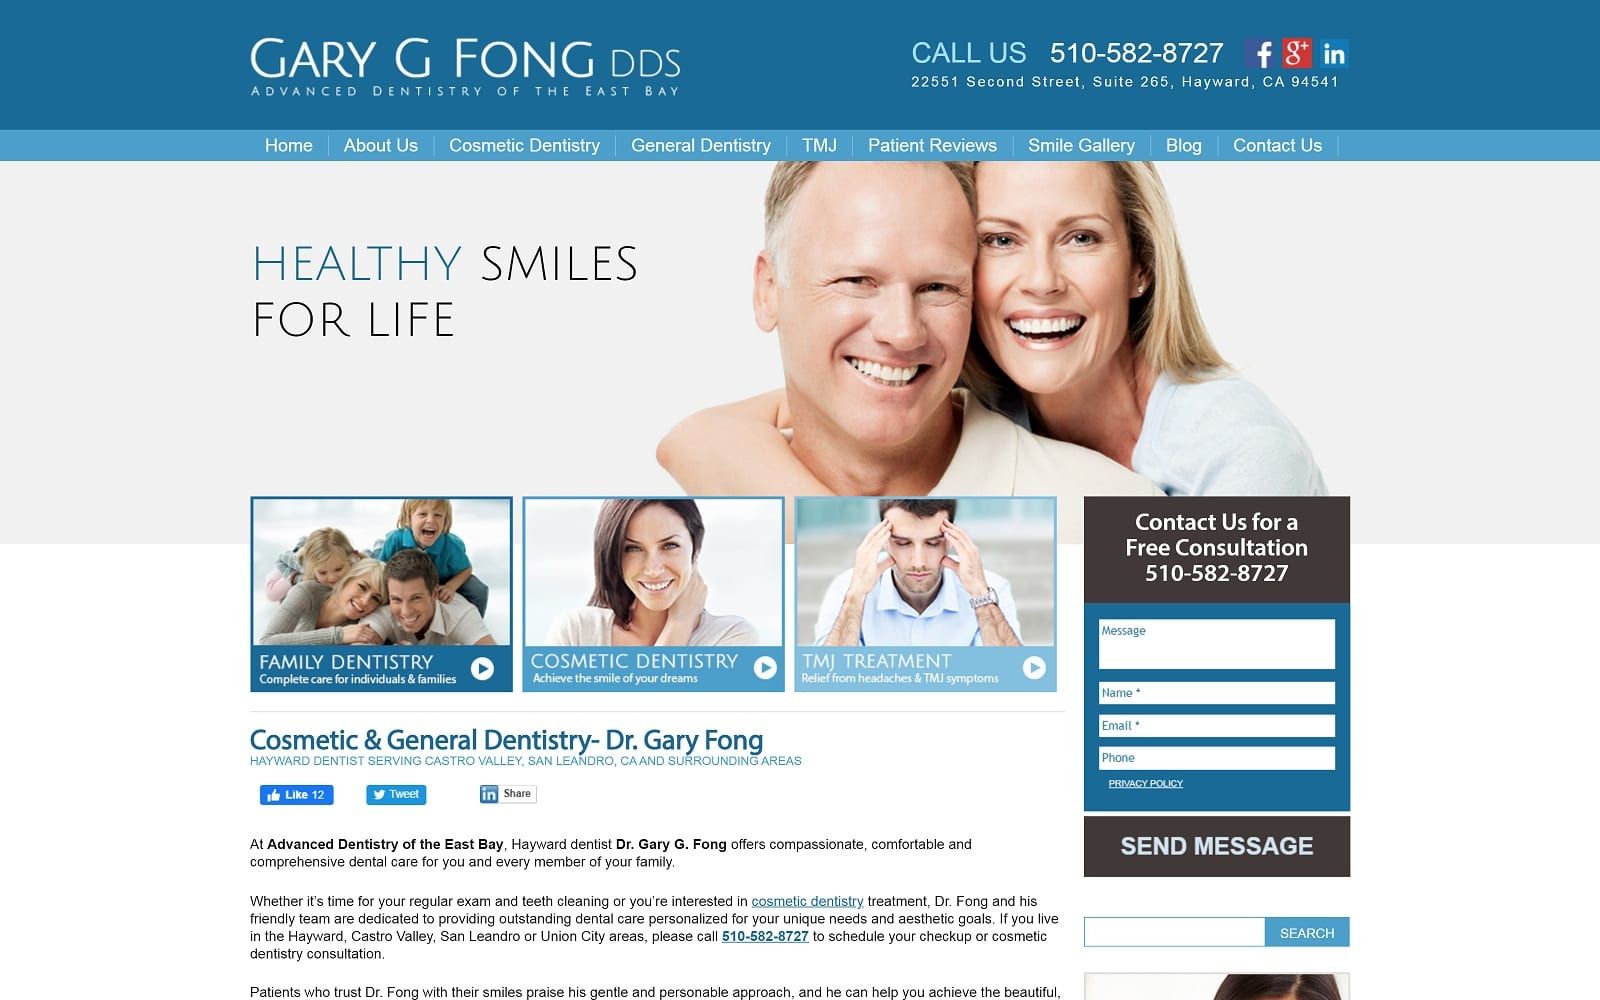 The screenshot of gary g. Fong, dds - advanced dentistry of the east bay drgaryfong. Com website